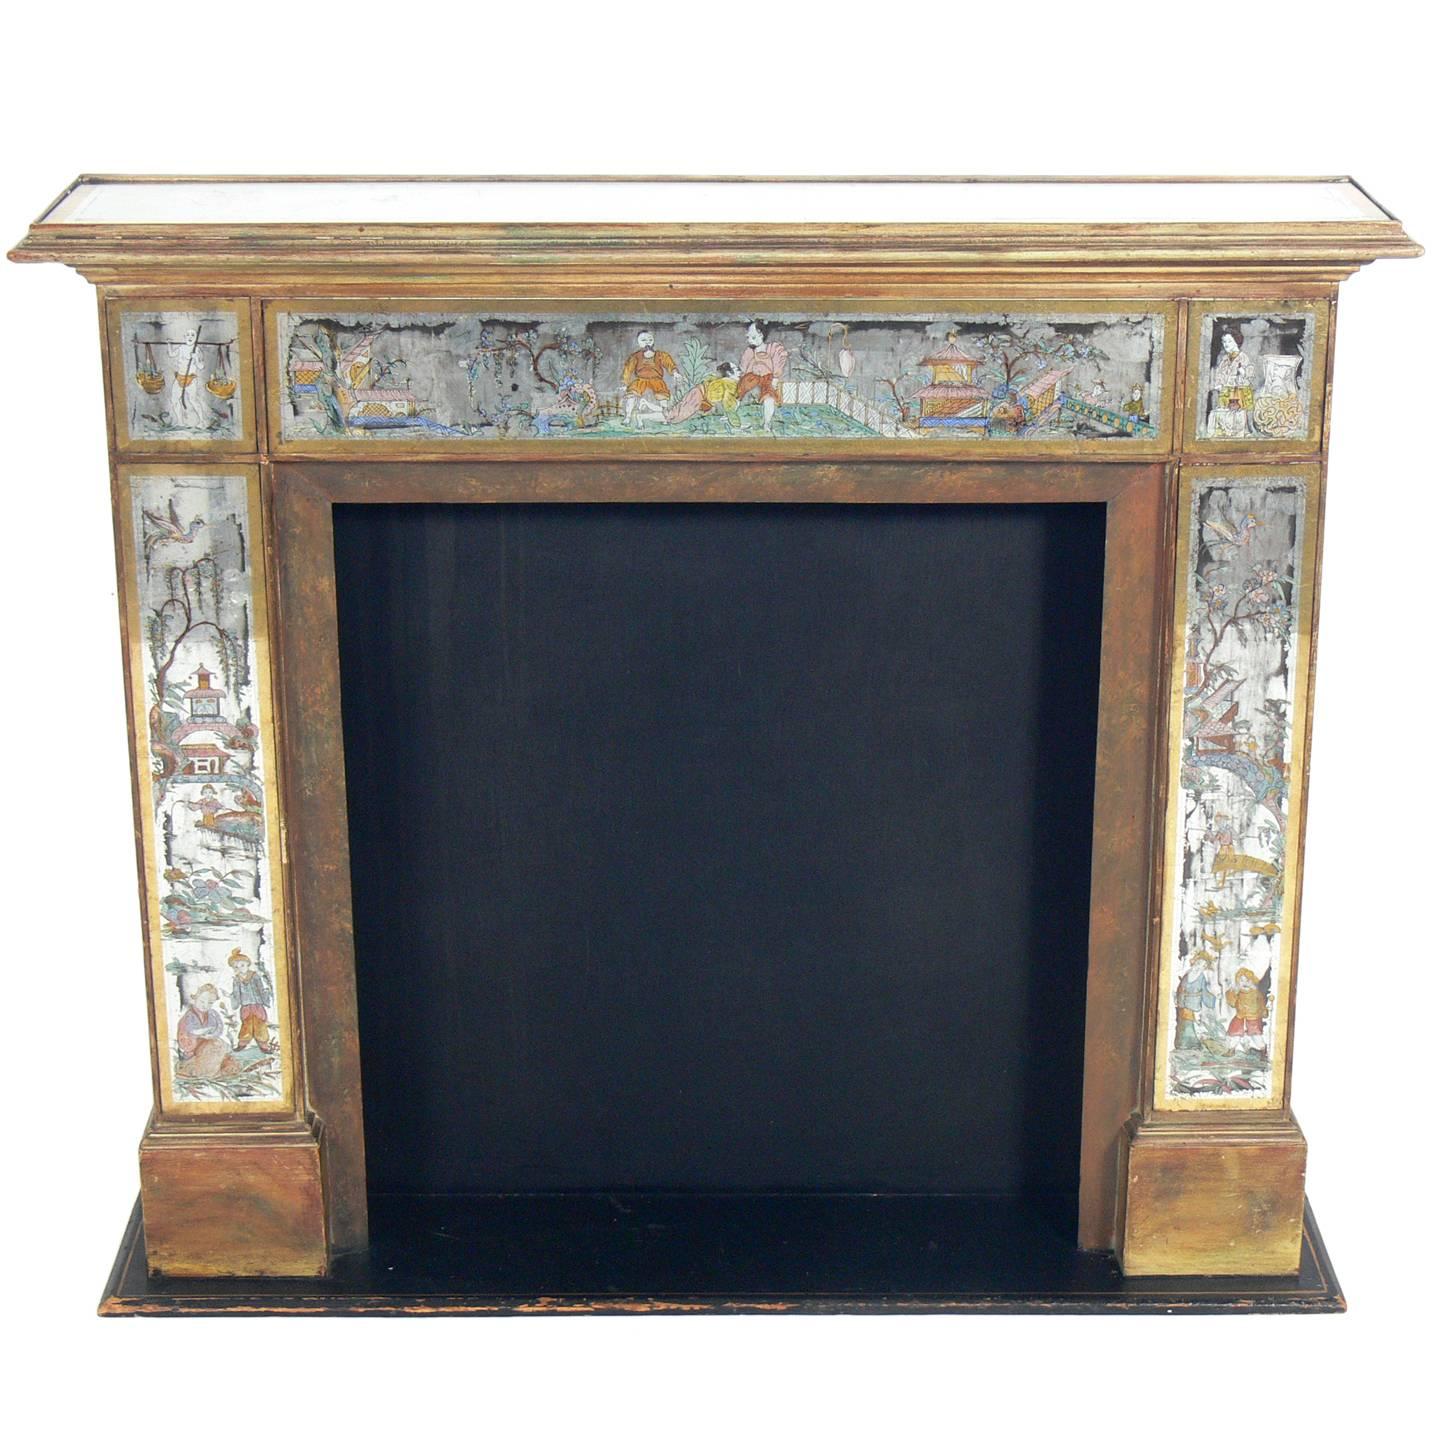 Hollywood Regency 1930s Mirrored Fireplace Mantel with Asian Églomisé Decoration